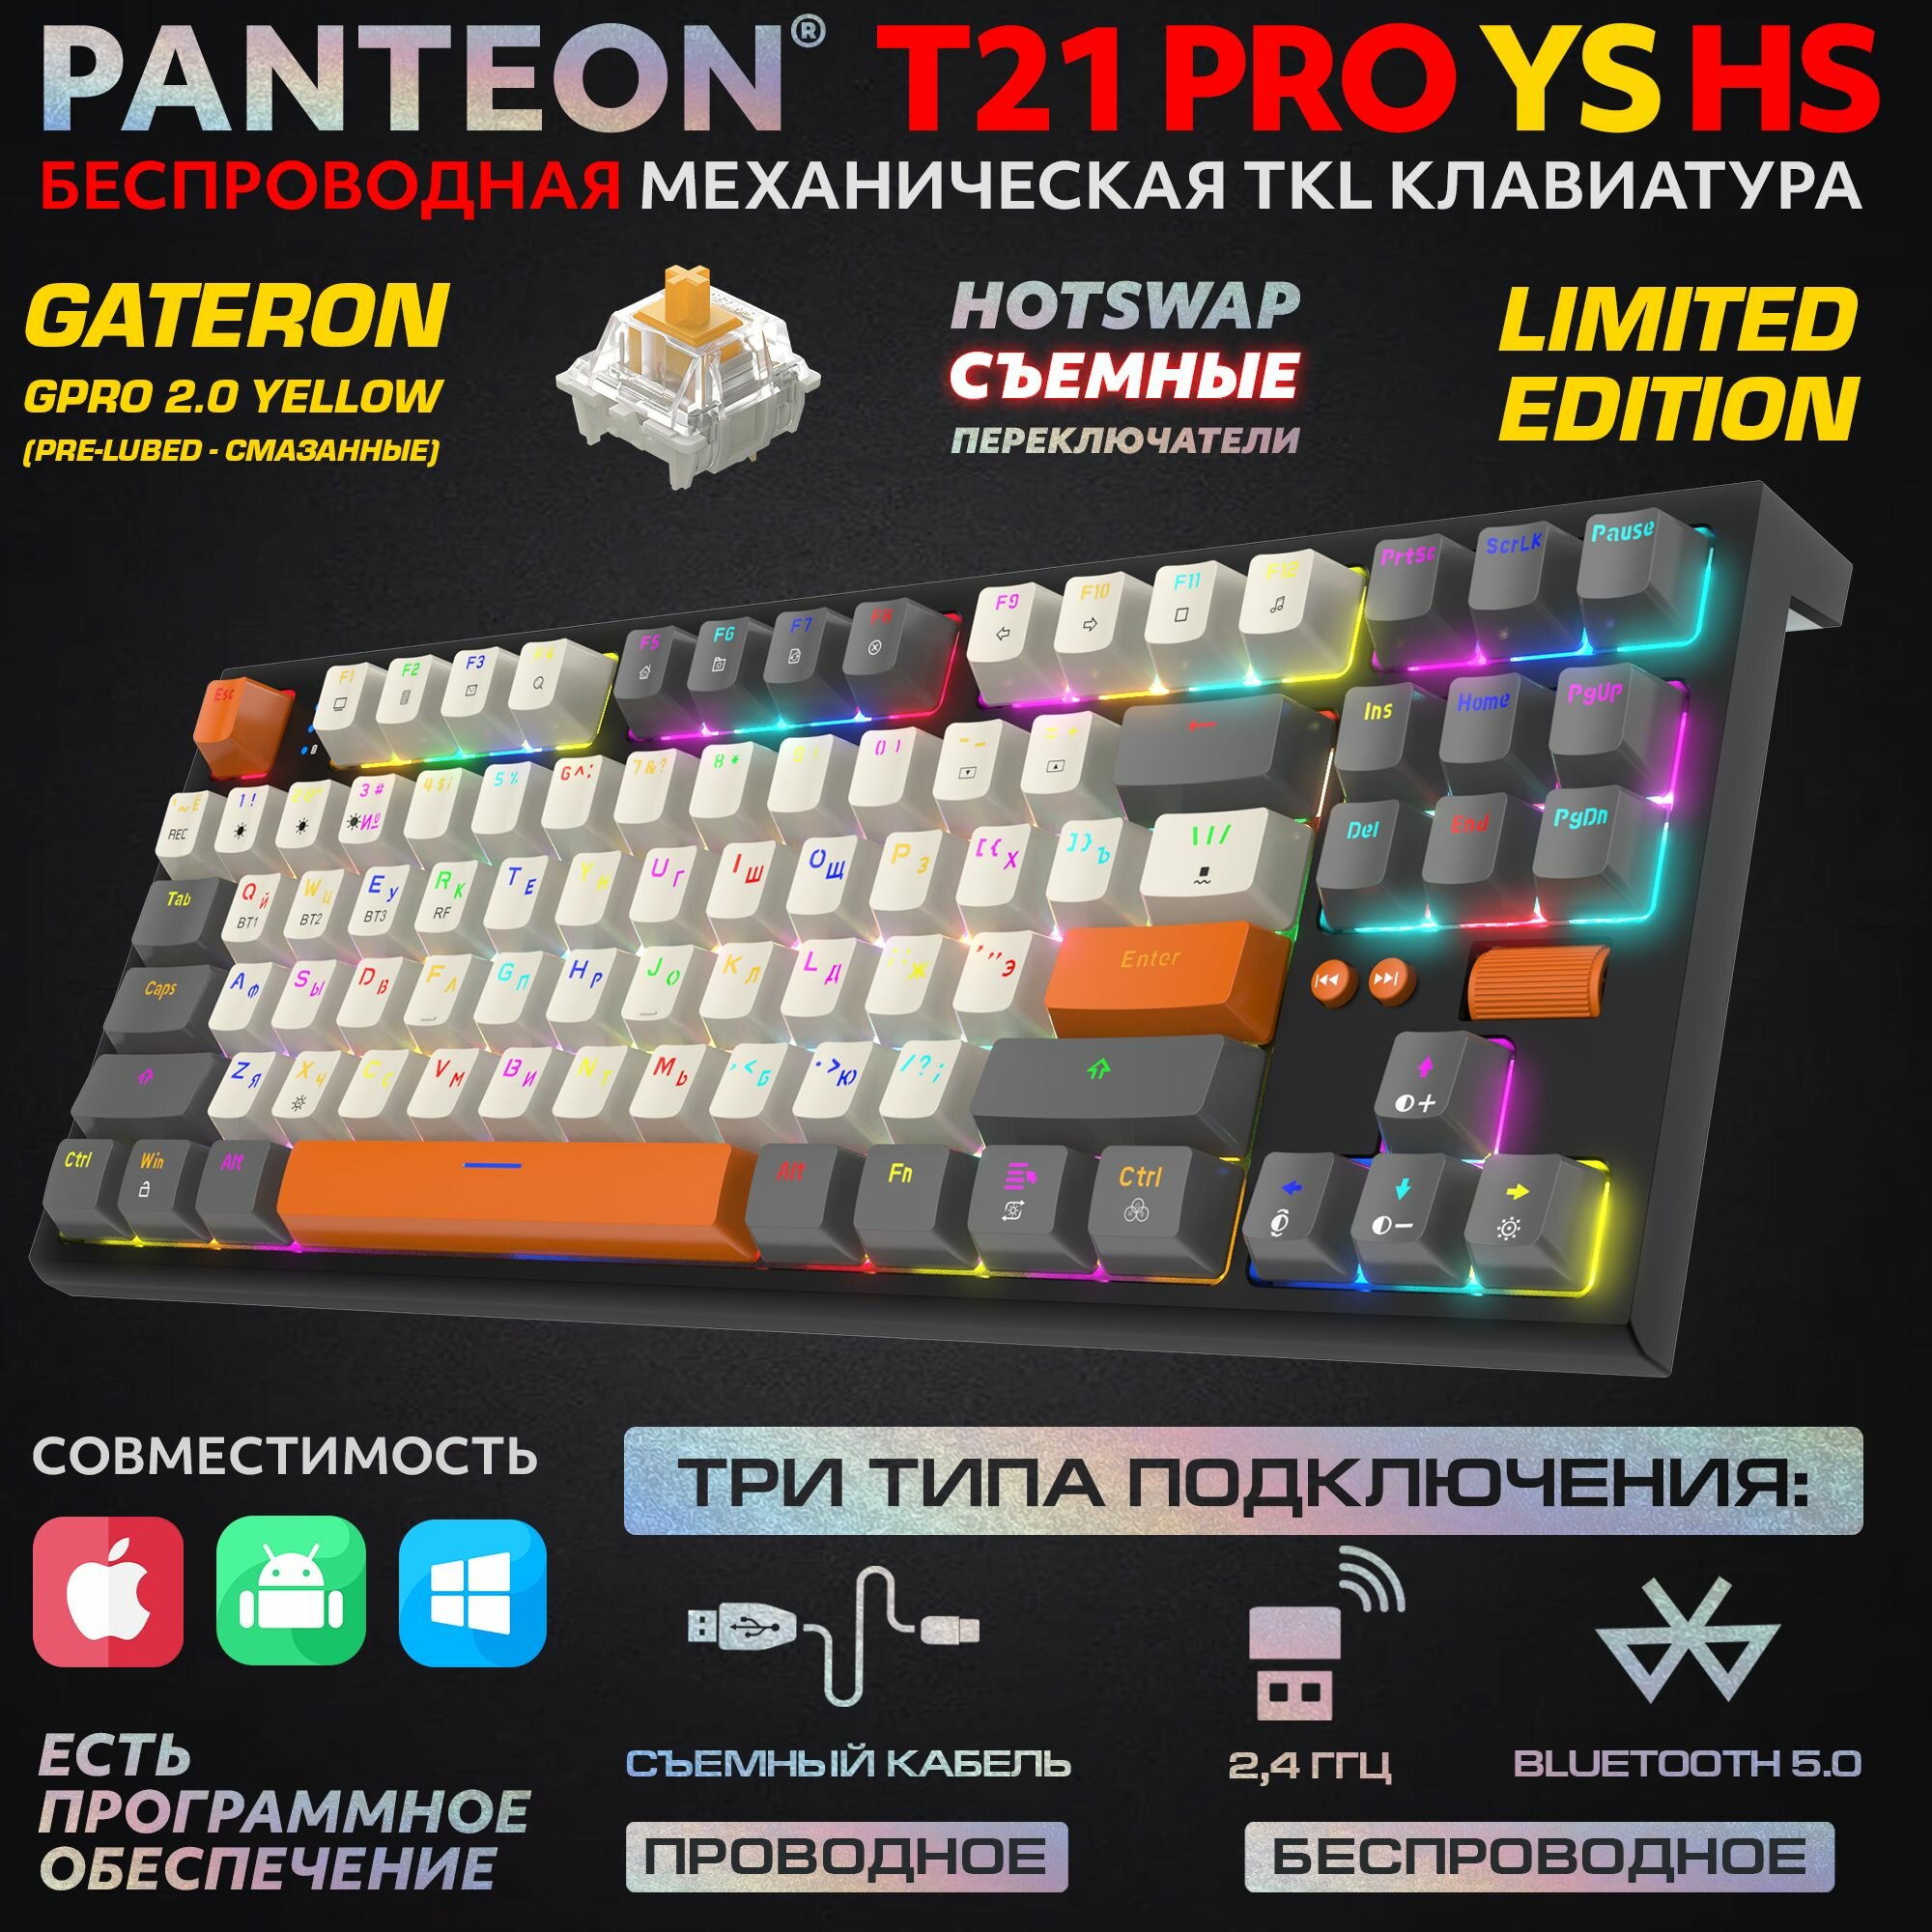 PANTEON T21 PRO YS HS Black-Ivory-Grey (65) Limited Edition Механическая игровая программируемая клавиатура (TKL 80%, подсветка LED RGB, свитчи GATERON GPRO 2.0 Yellow, 87 кл, HotSwap, USB/Bluetooth/2,4 Ггц, аккумулятор 2000 mAh, ПО)